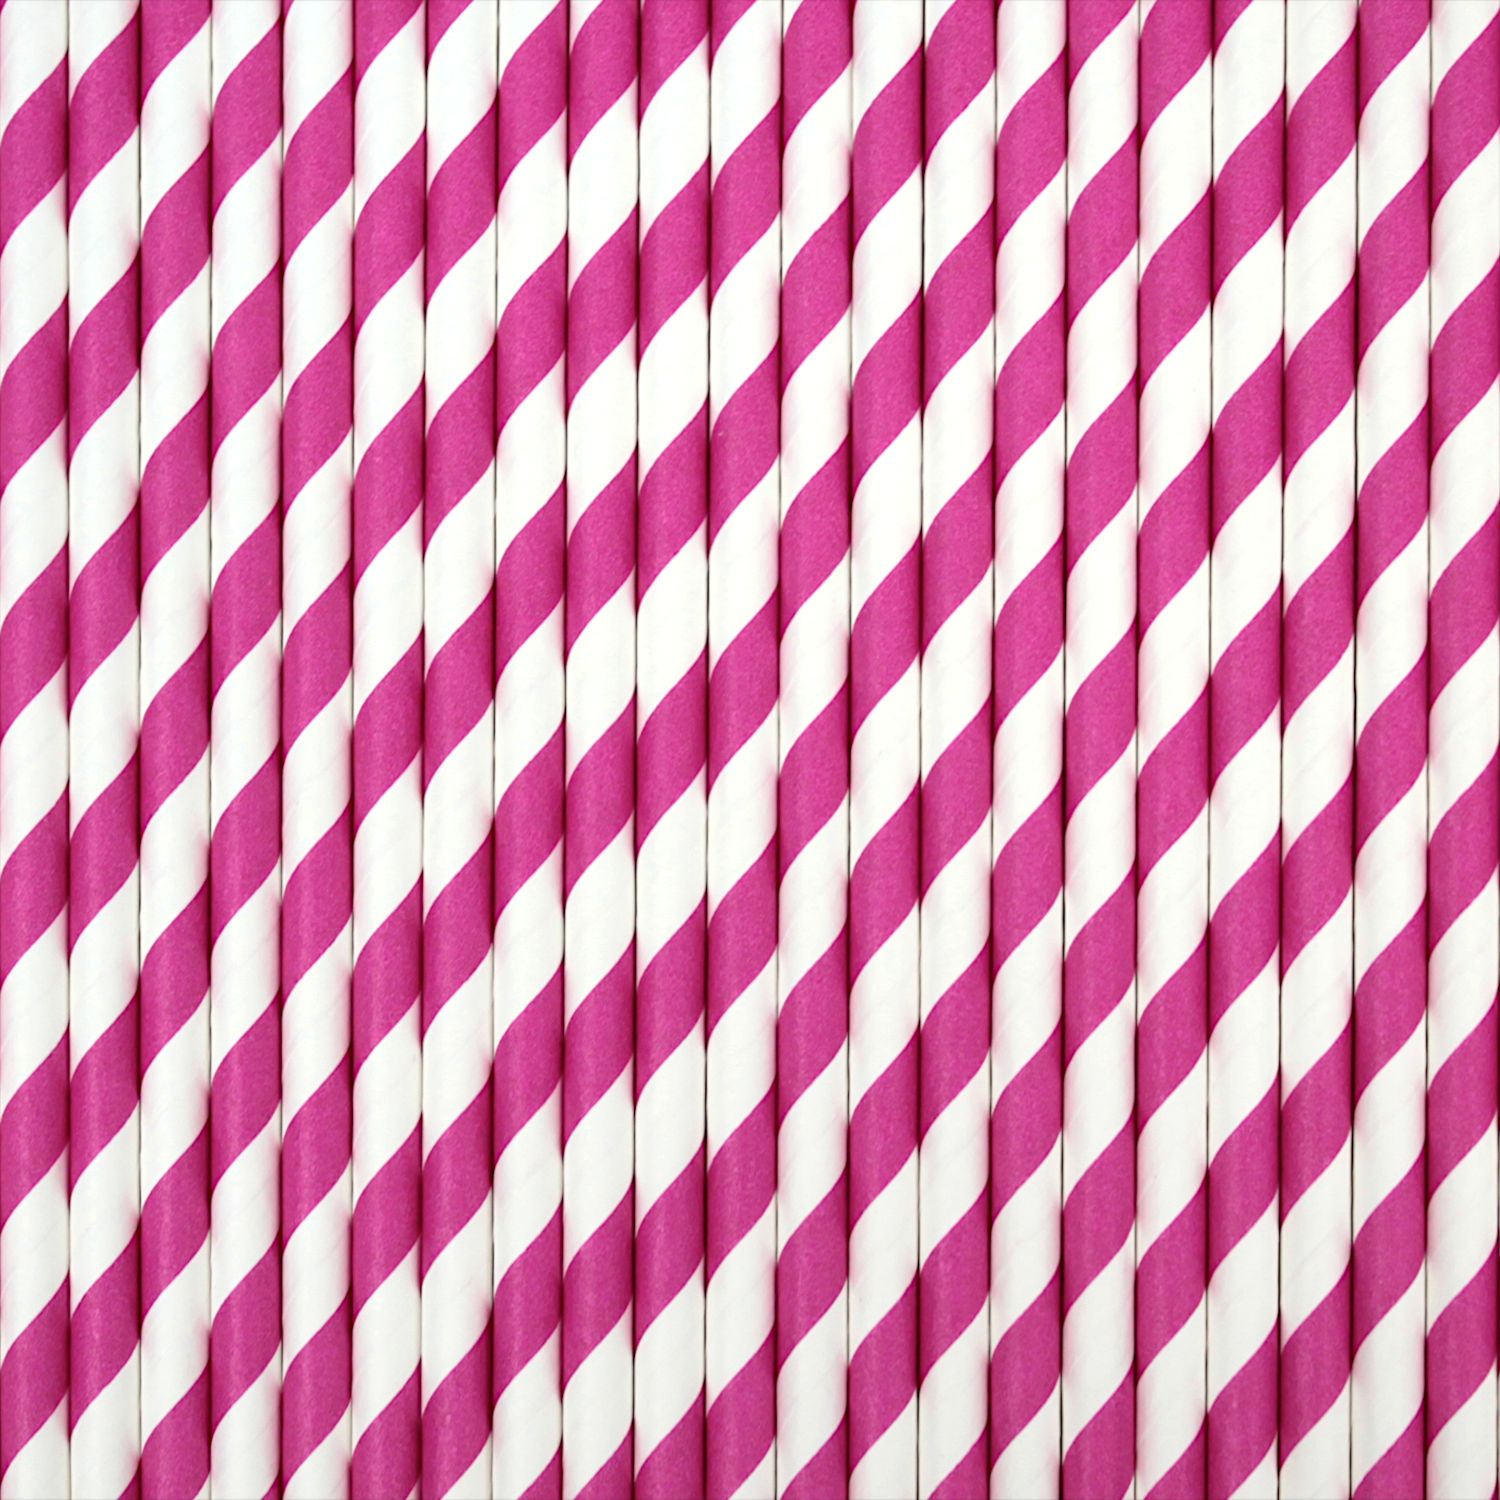 Pink & White Striped Paper Straws (6mm x 200mm) - Quality Drinking Straws - Intrinsic Paper Straws